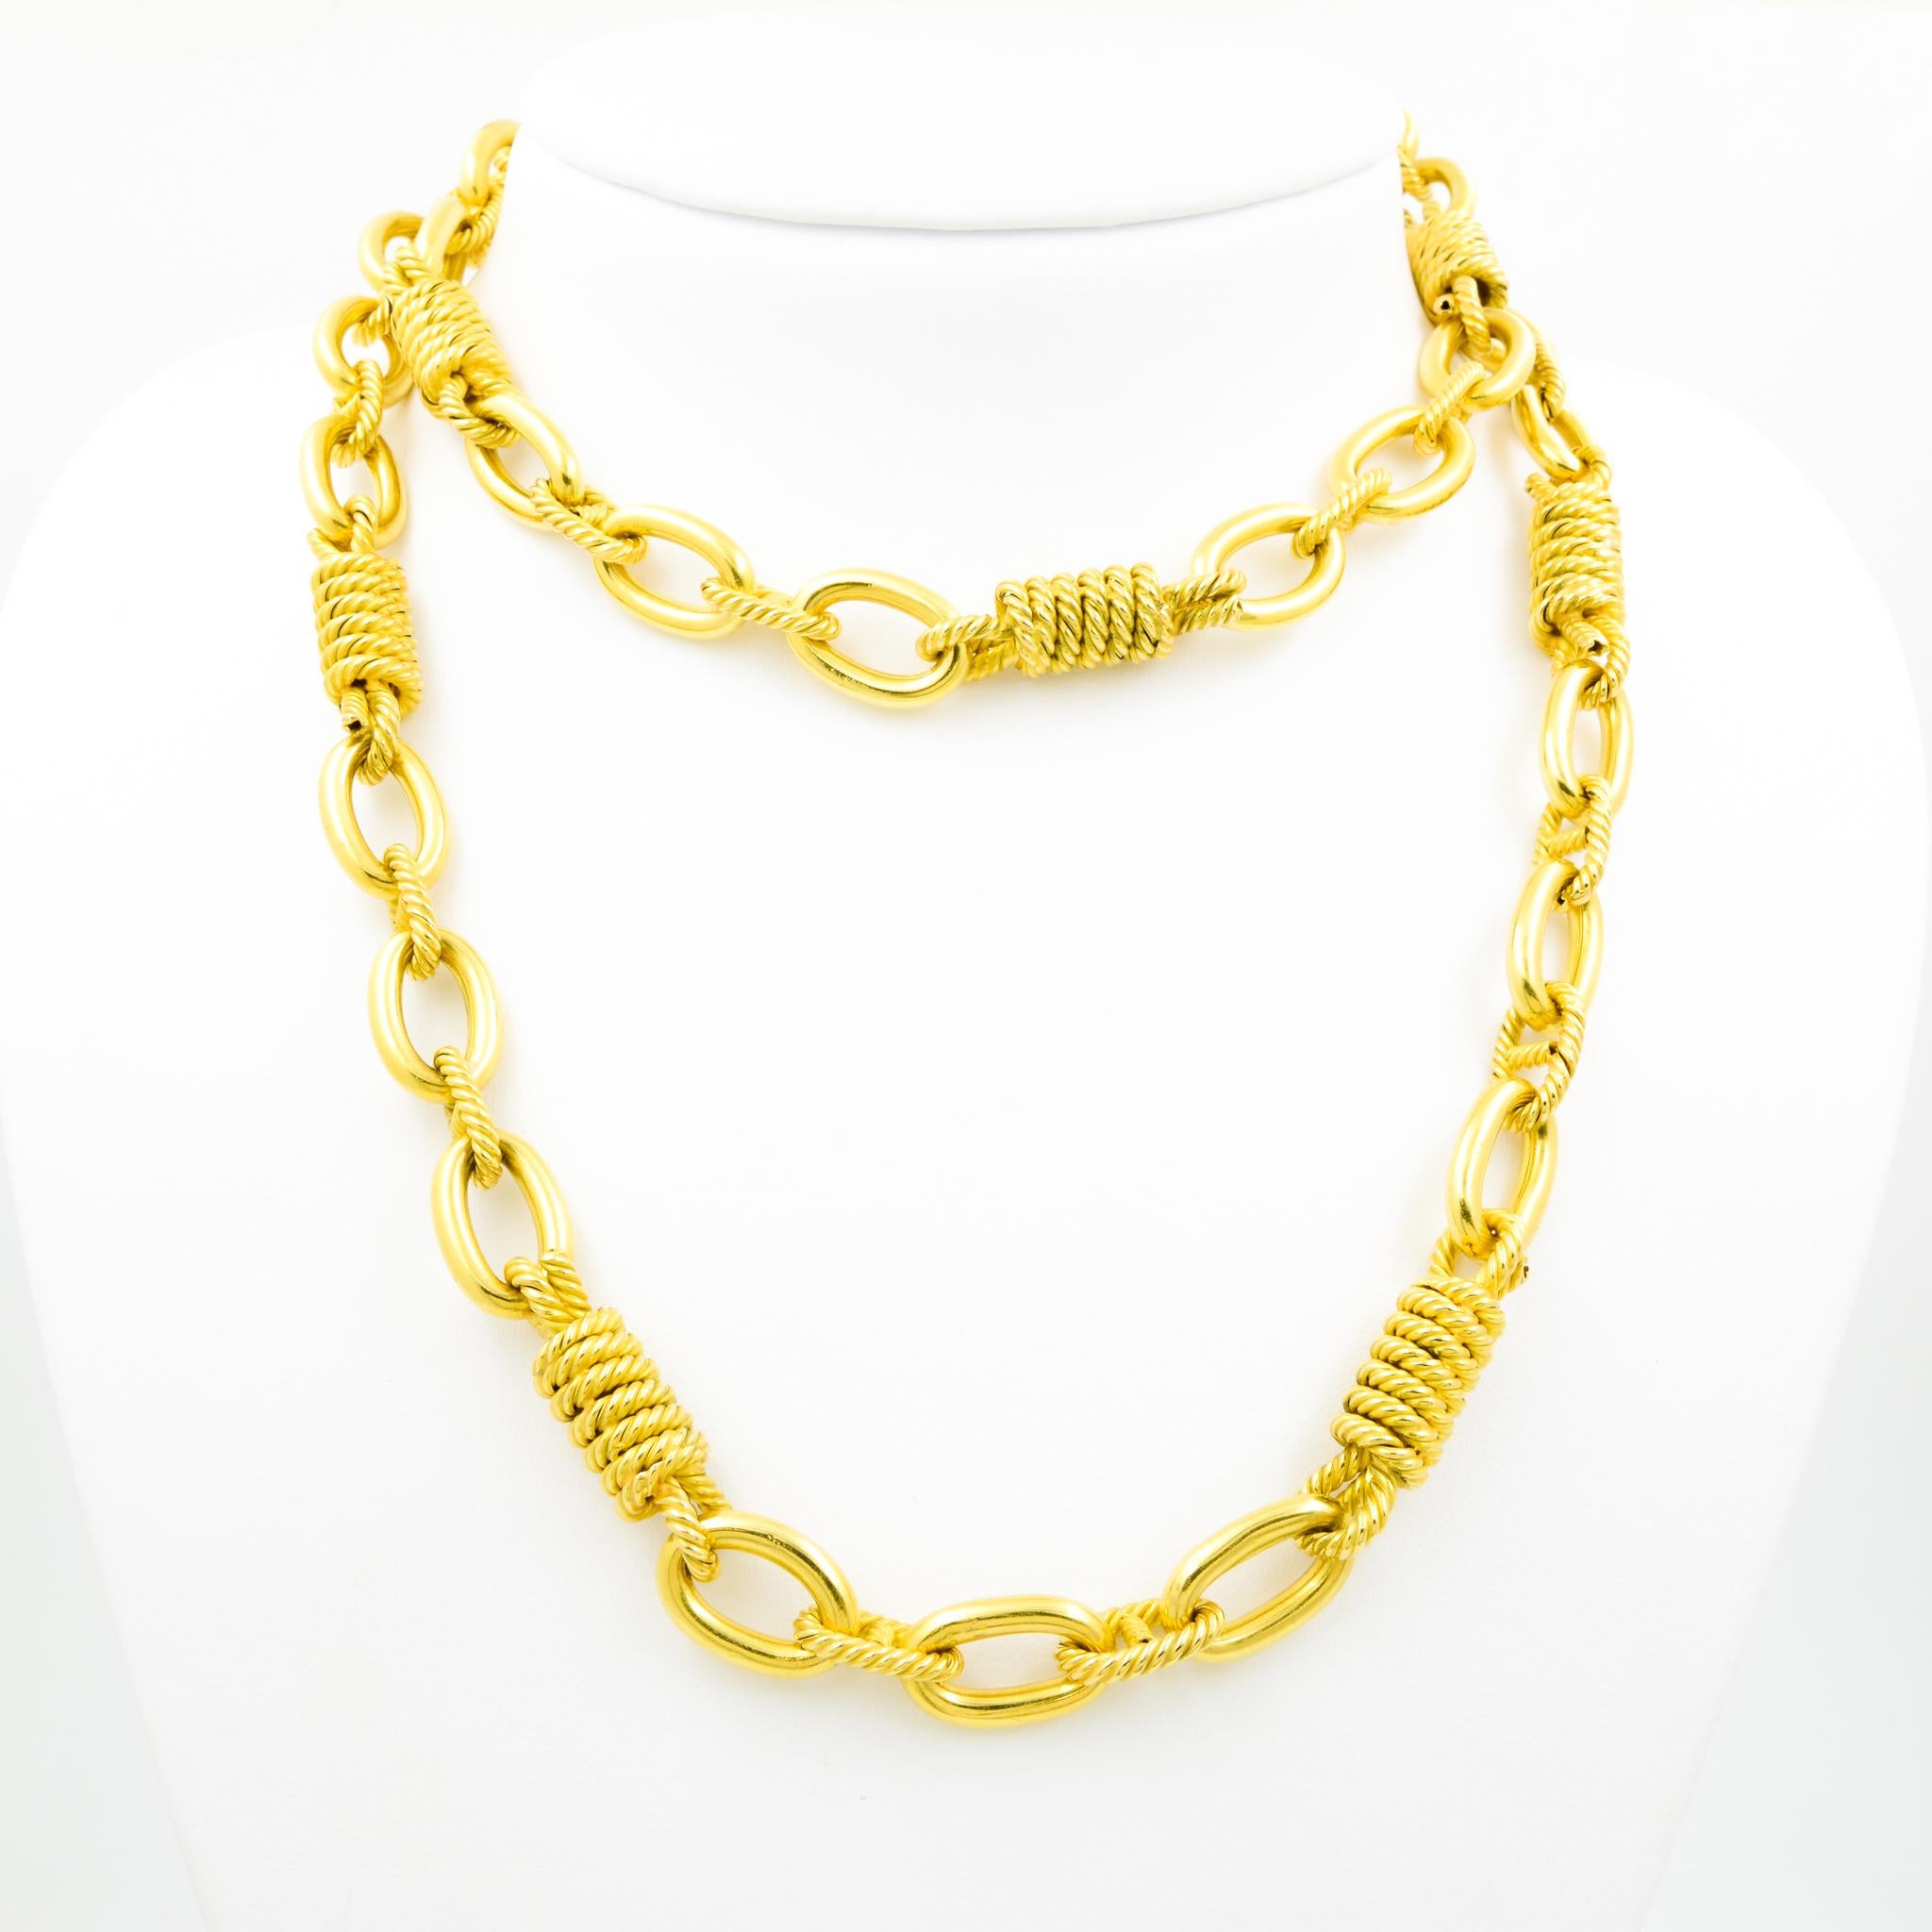 18 karat gold rope chain